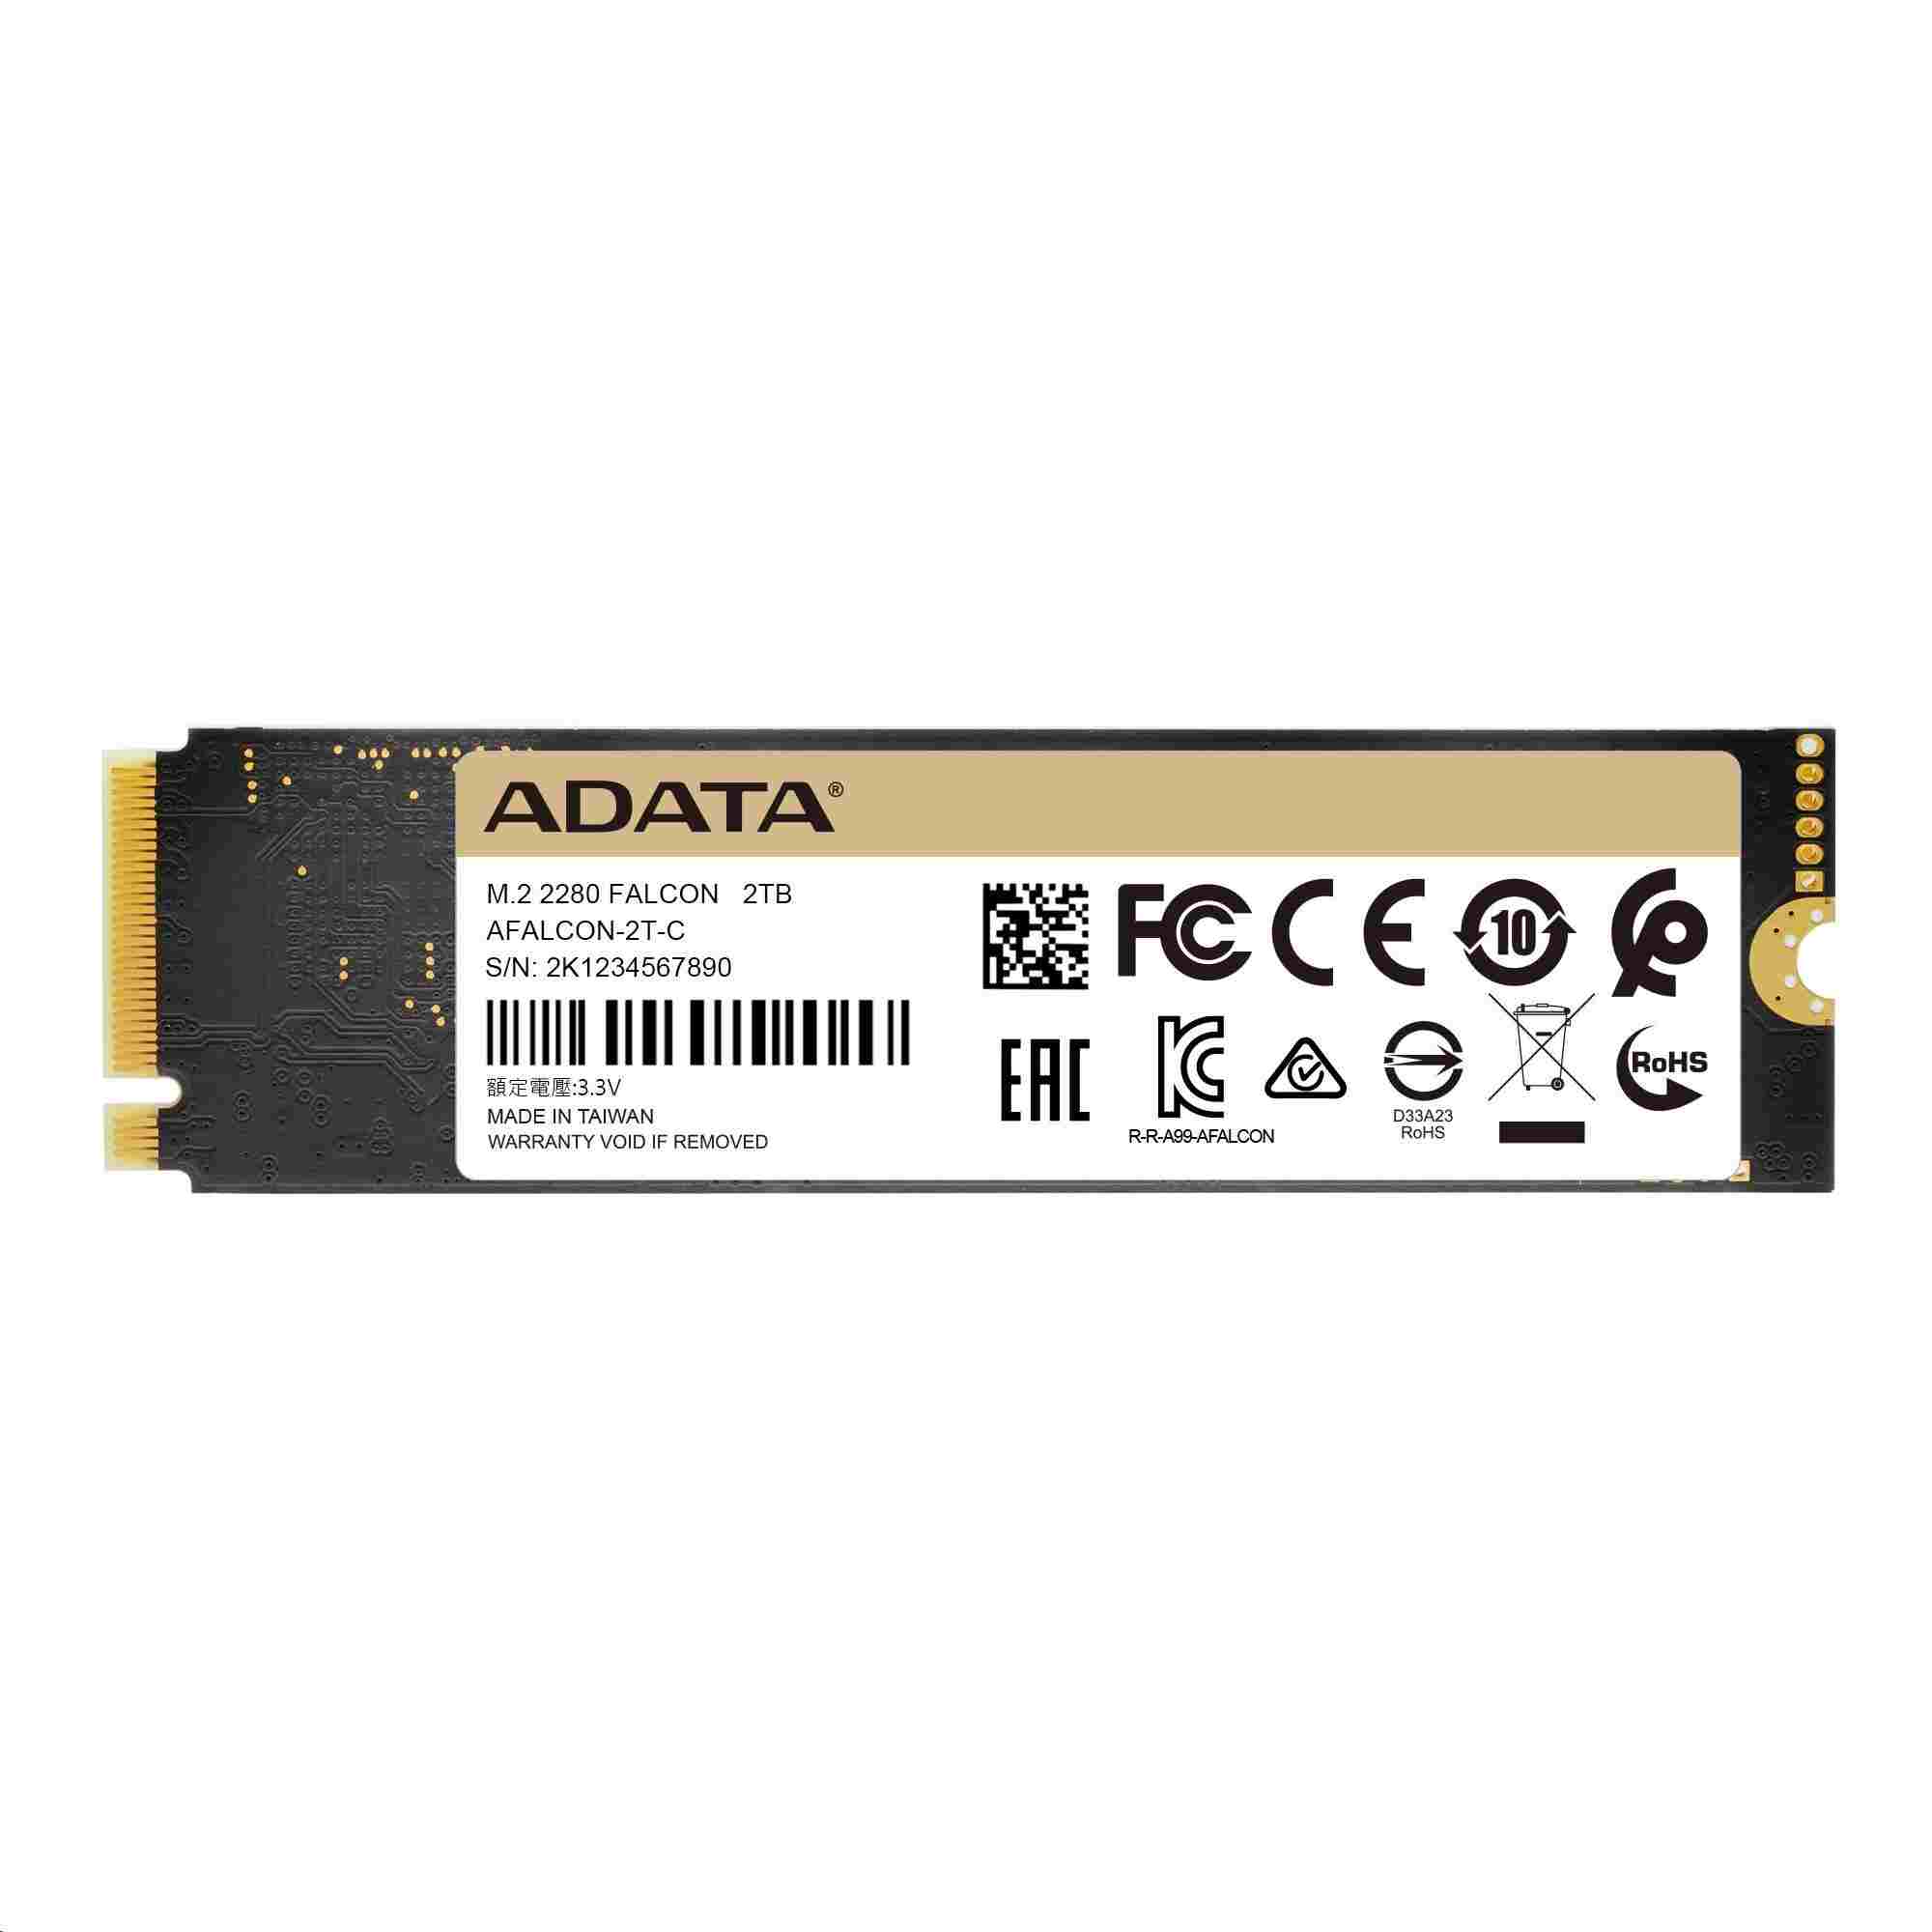 ADATA SSD 512GB FALCON PCIe Gen3x4 M.2 2280 (R:3100/  W:1500MB/ s)4 